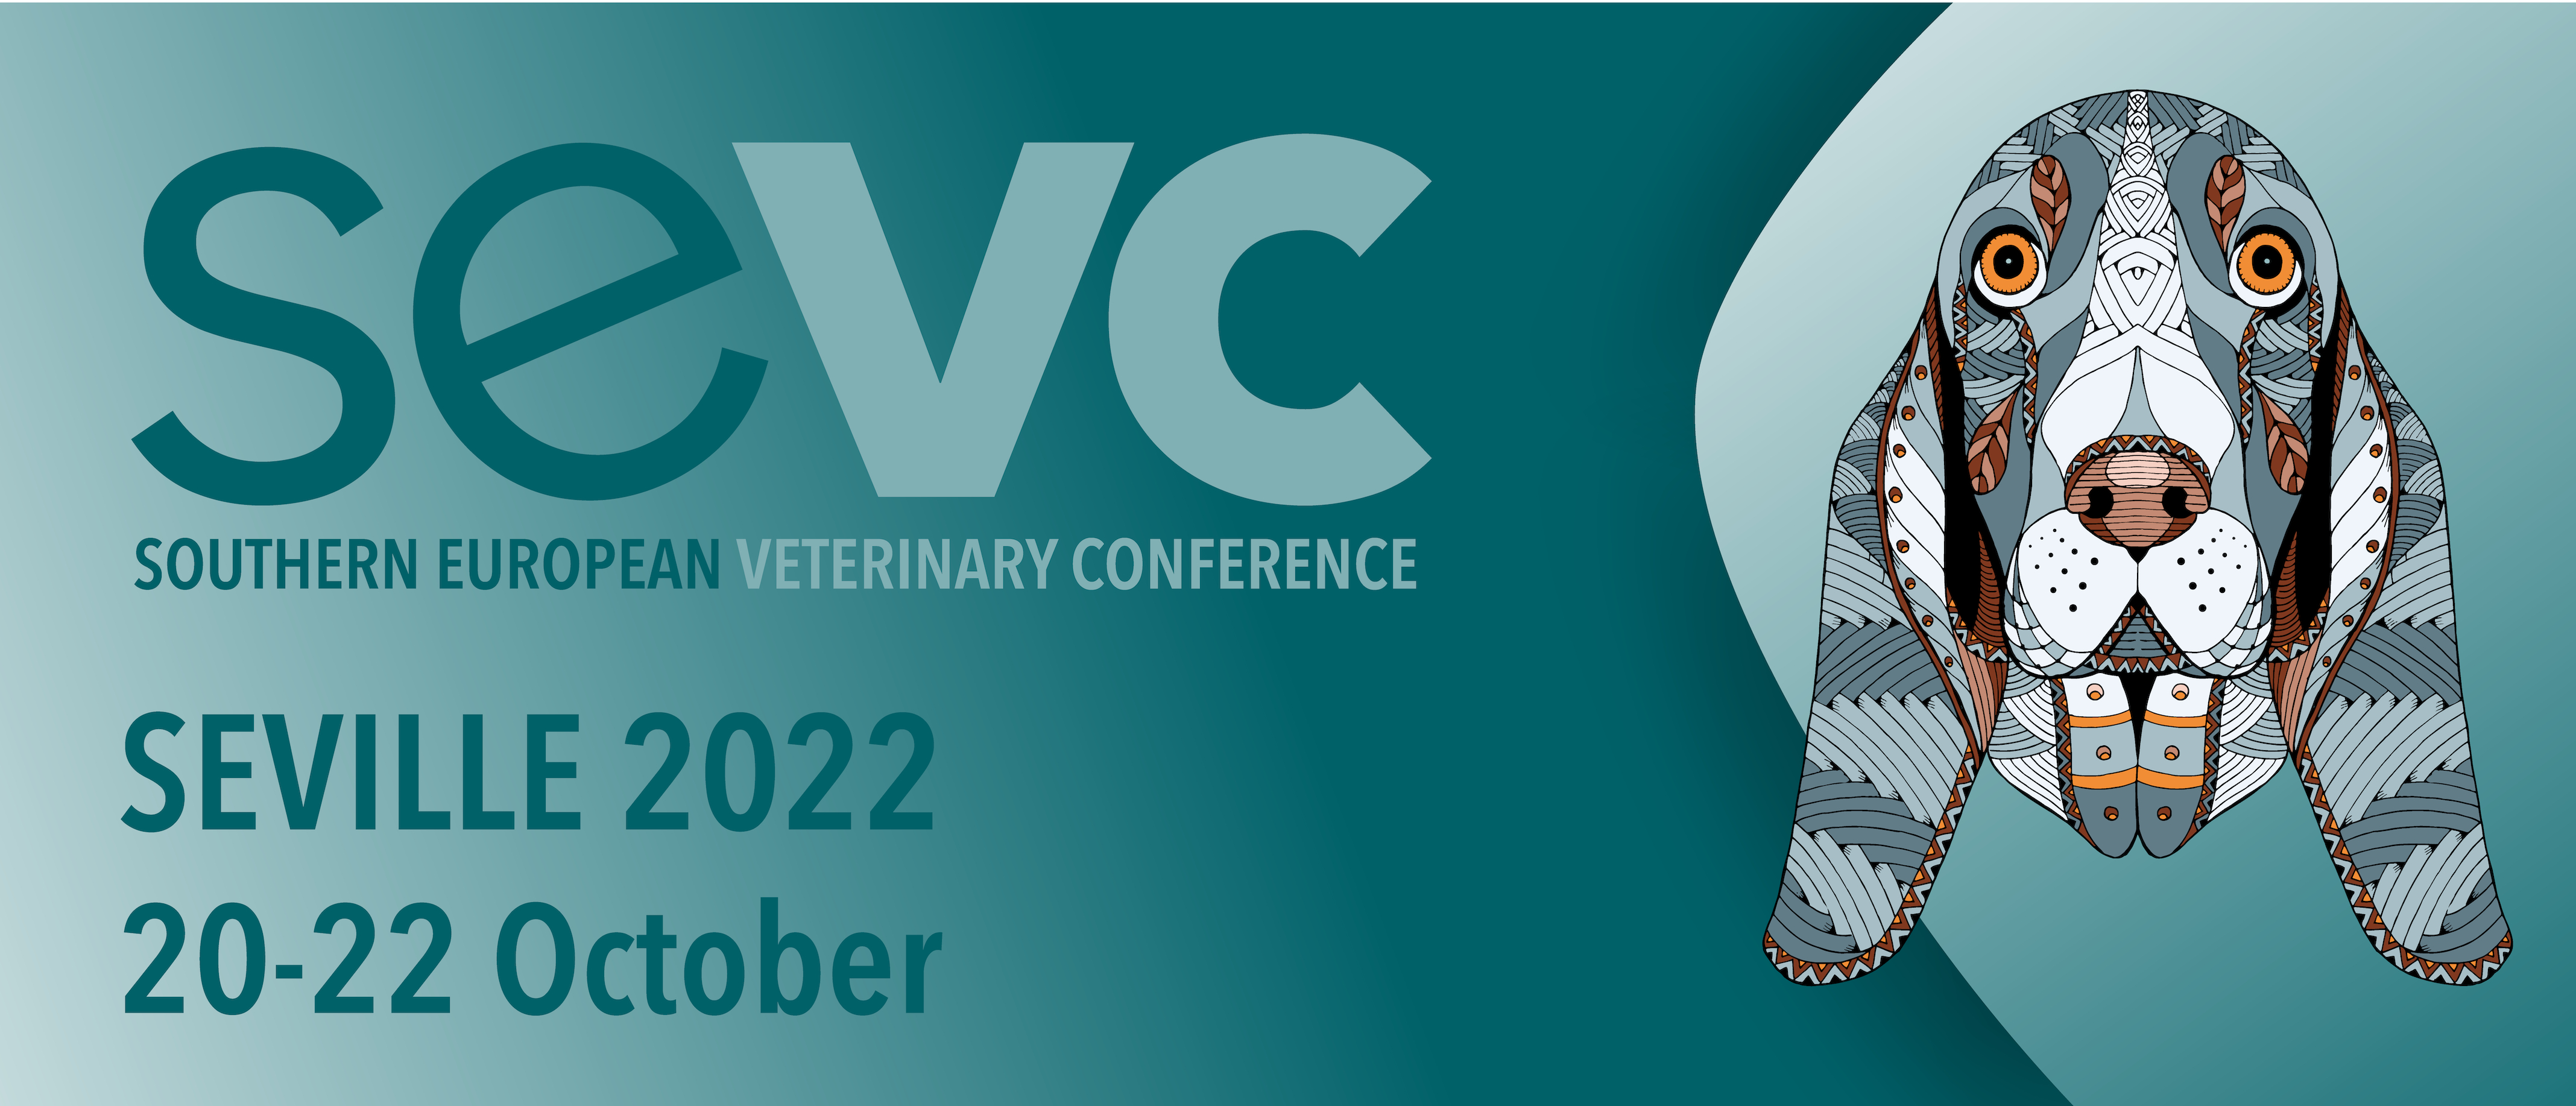 Congresso Nacional AVEPA - SEVC - Sevilla 20-22 Octubre 2022